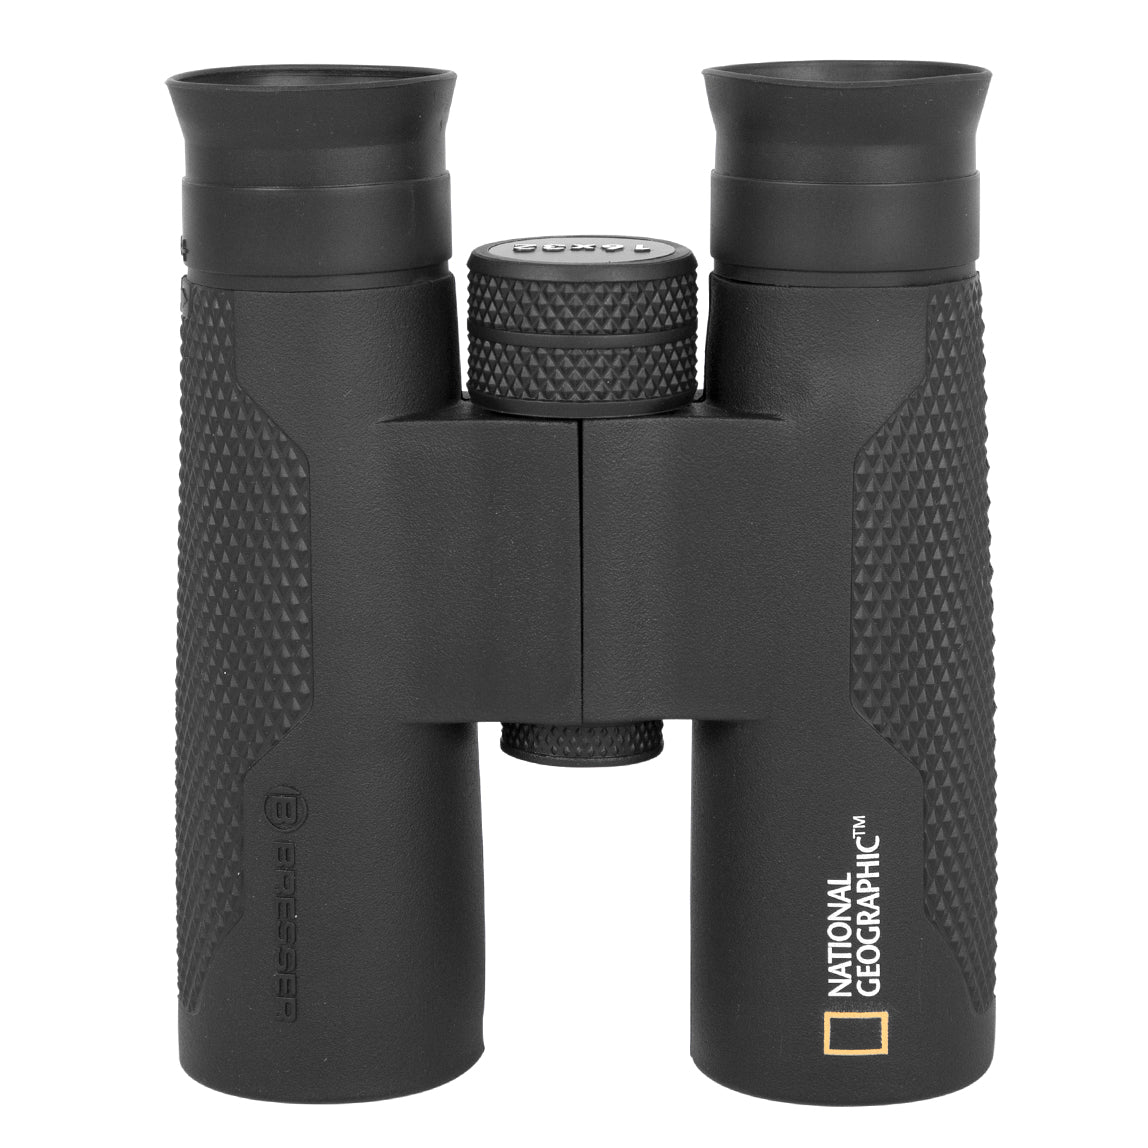 National Geographic 16×32 Binoculars